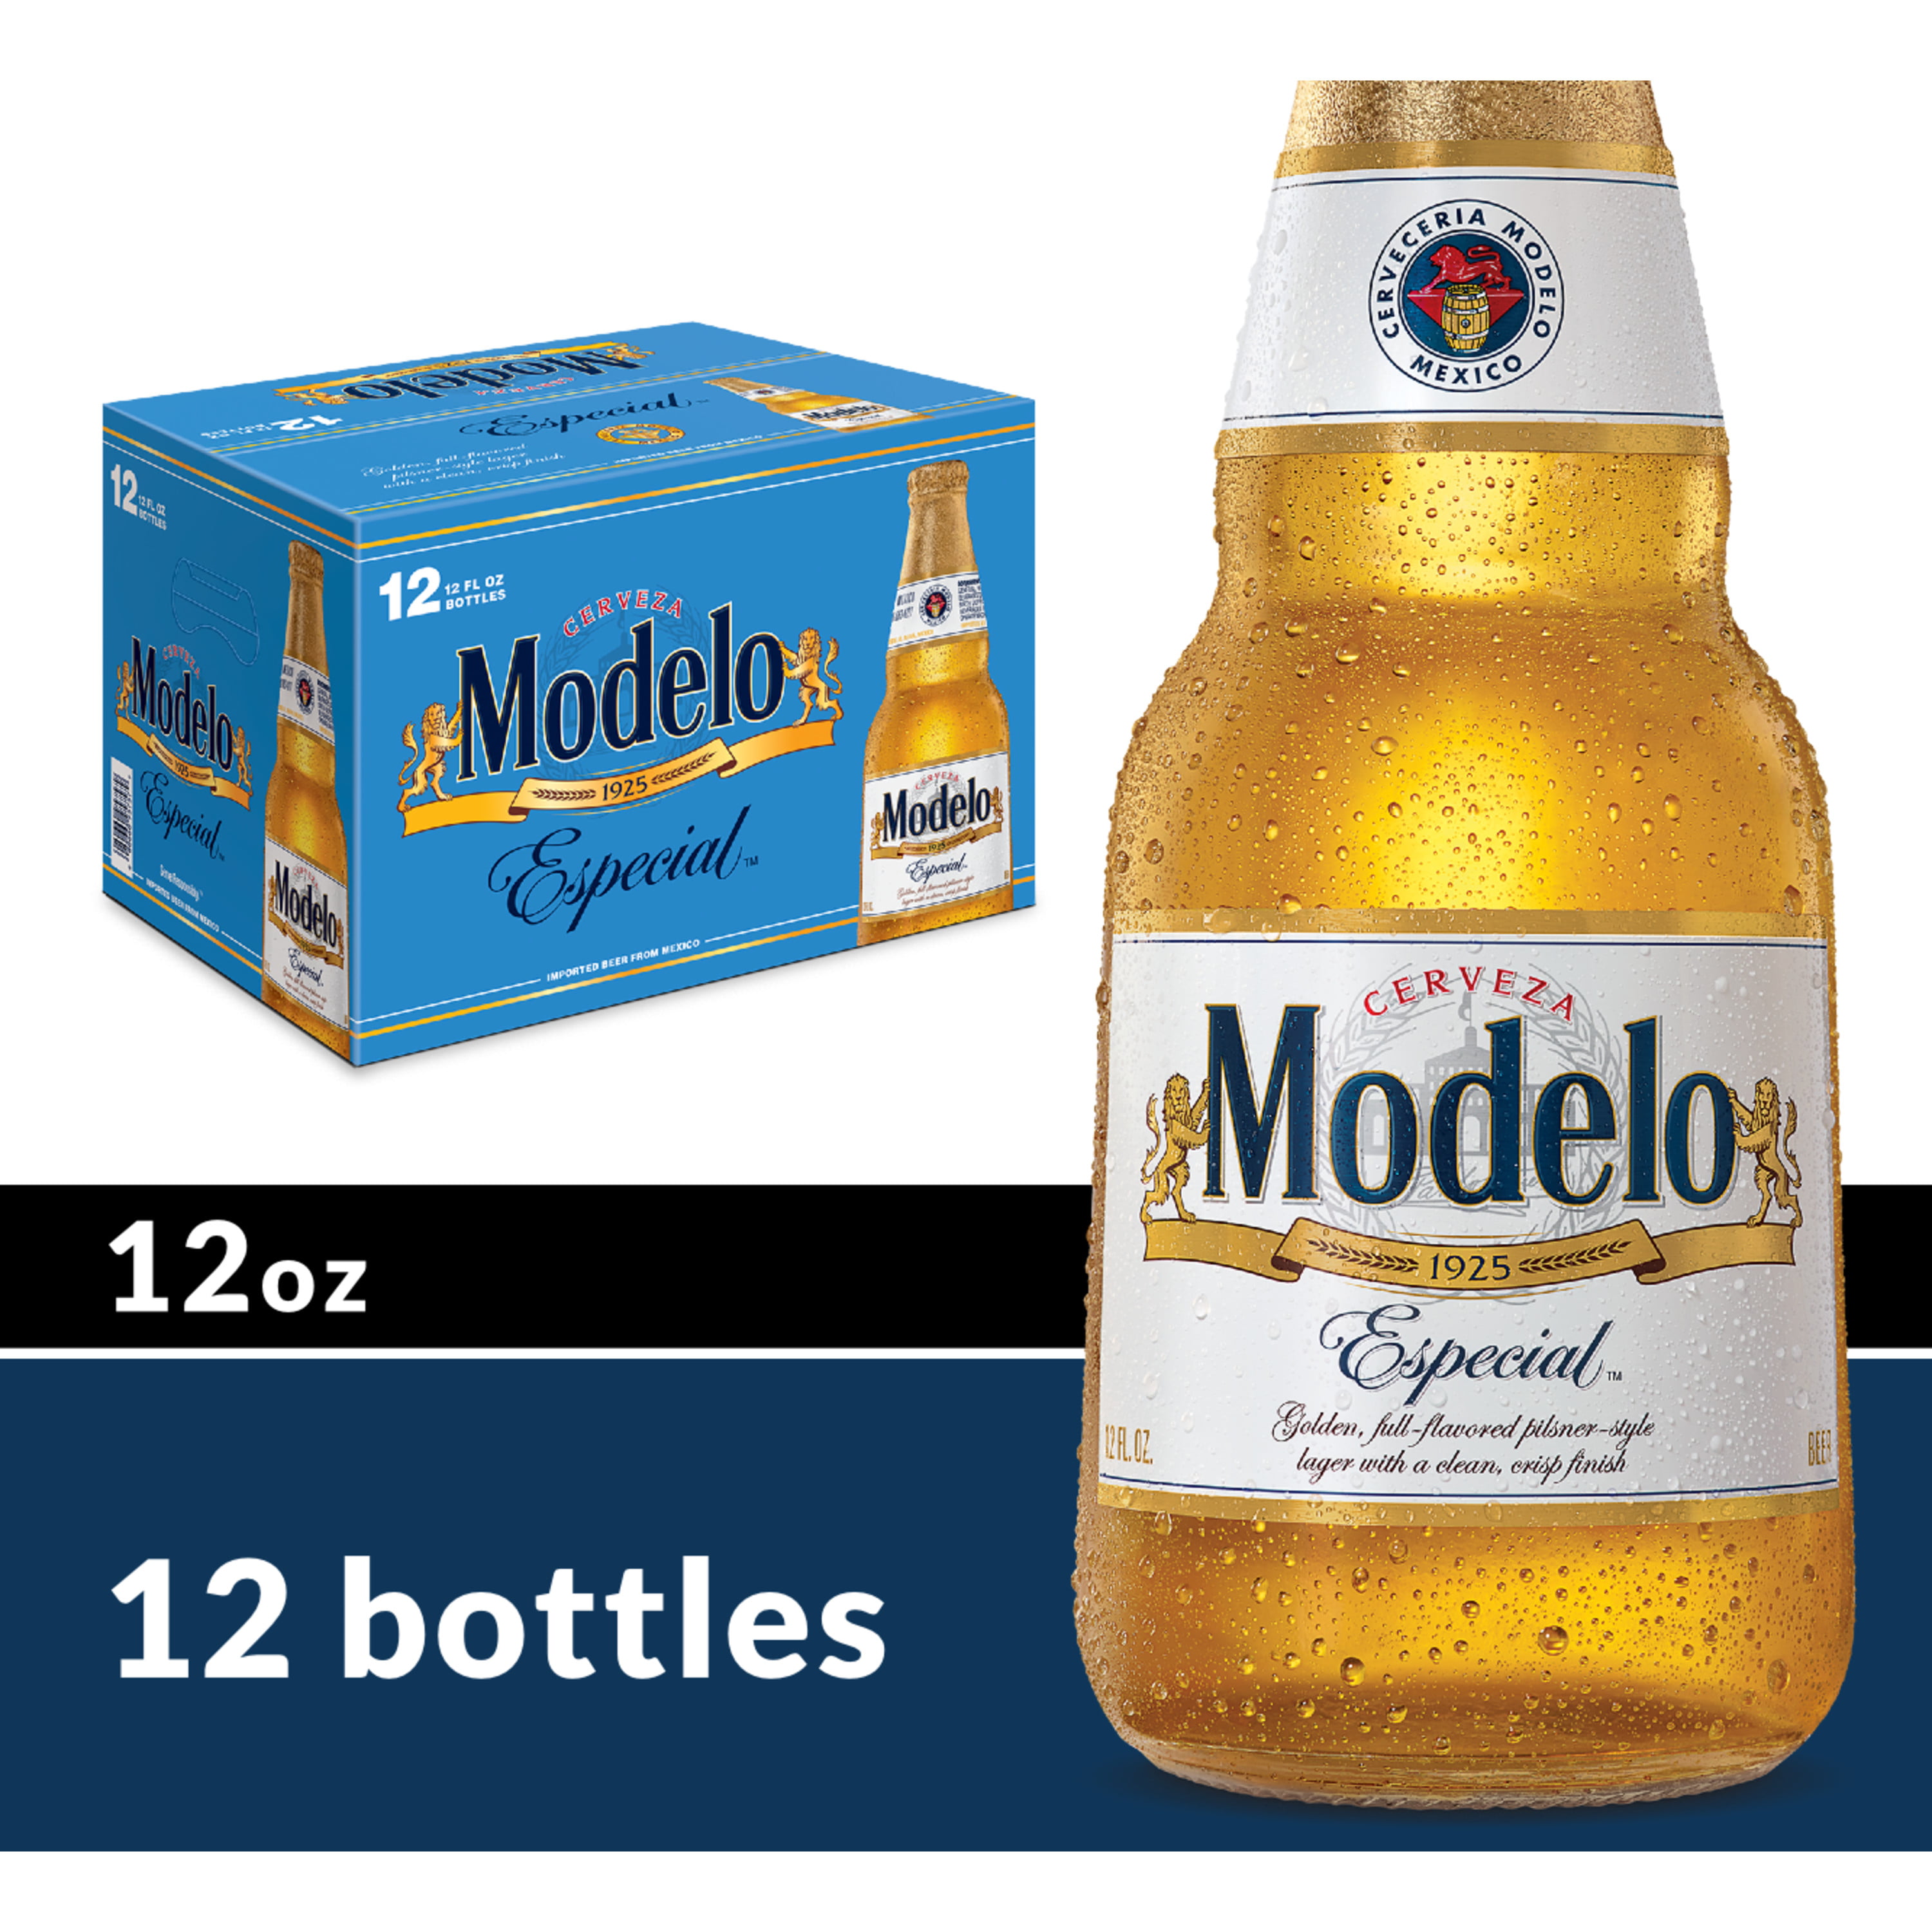 Modelo Especial Beer Mexican Lager, Beer 12 Pack, 12 fl oz Bottles,  %  ABV 